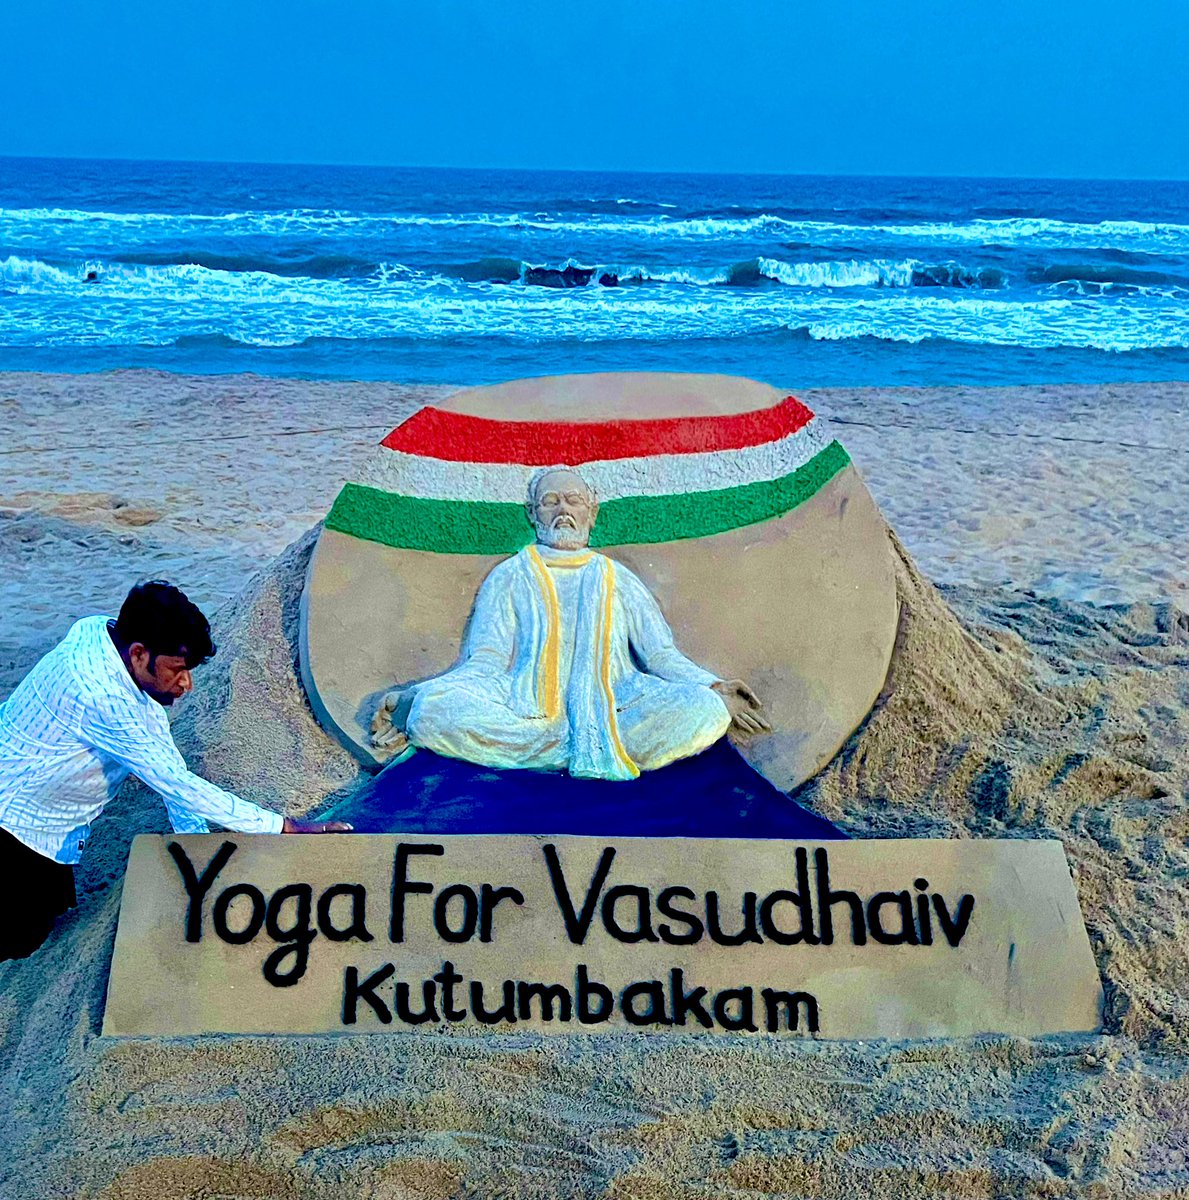 #InternationalDayofYoga2023. Today my SandArt at Puri beach in Odisha with message #YogaforVasudhaivaKutumbakam . 
Heartfelt thanks to our Hon’ble PM, Shri @narendramodi ji  in popularising Yoga among the masses around the world.